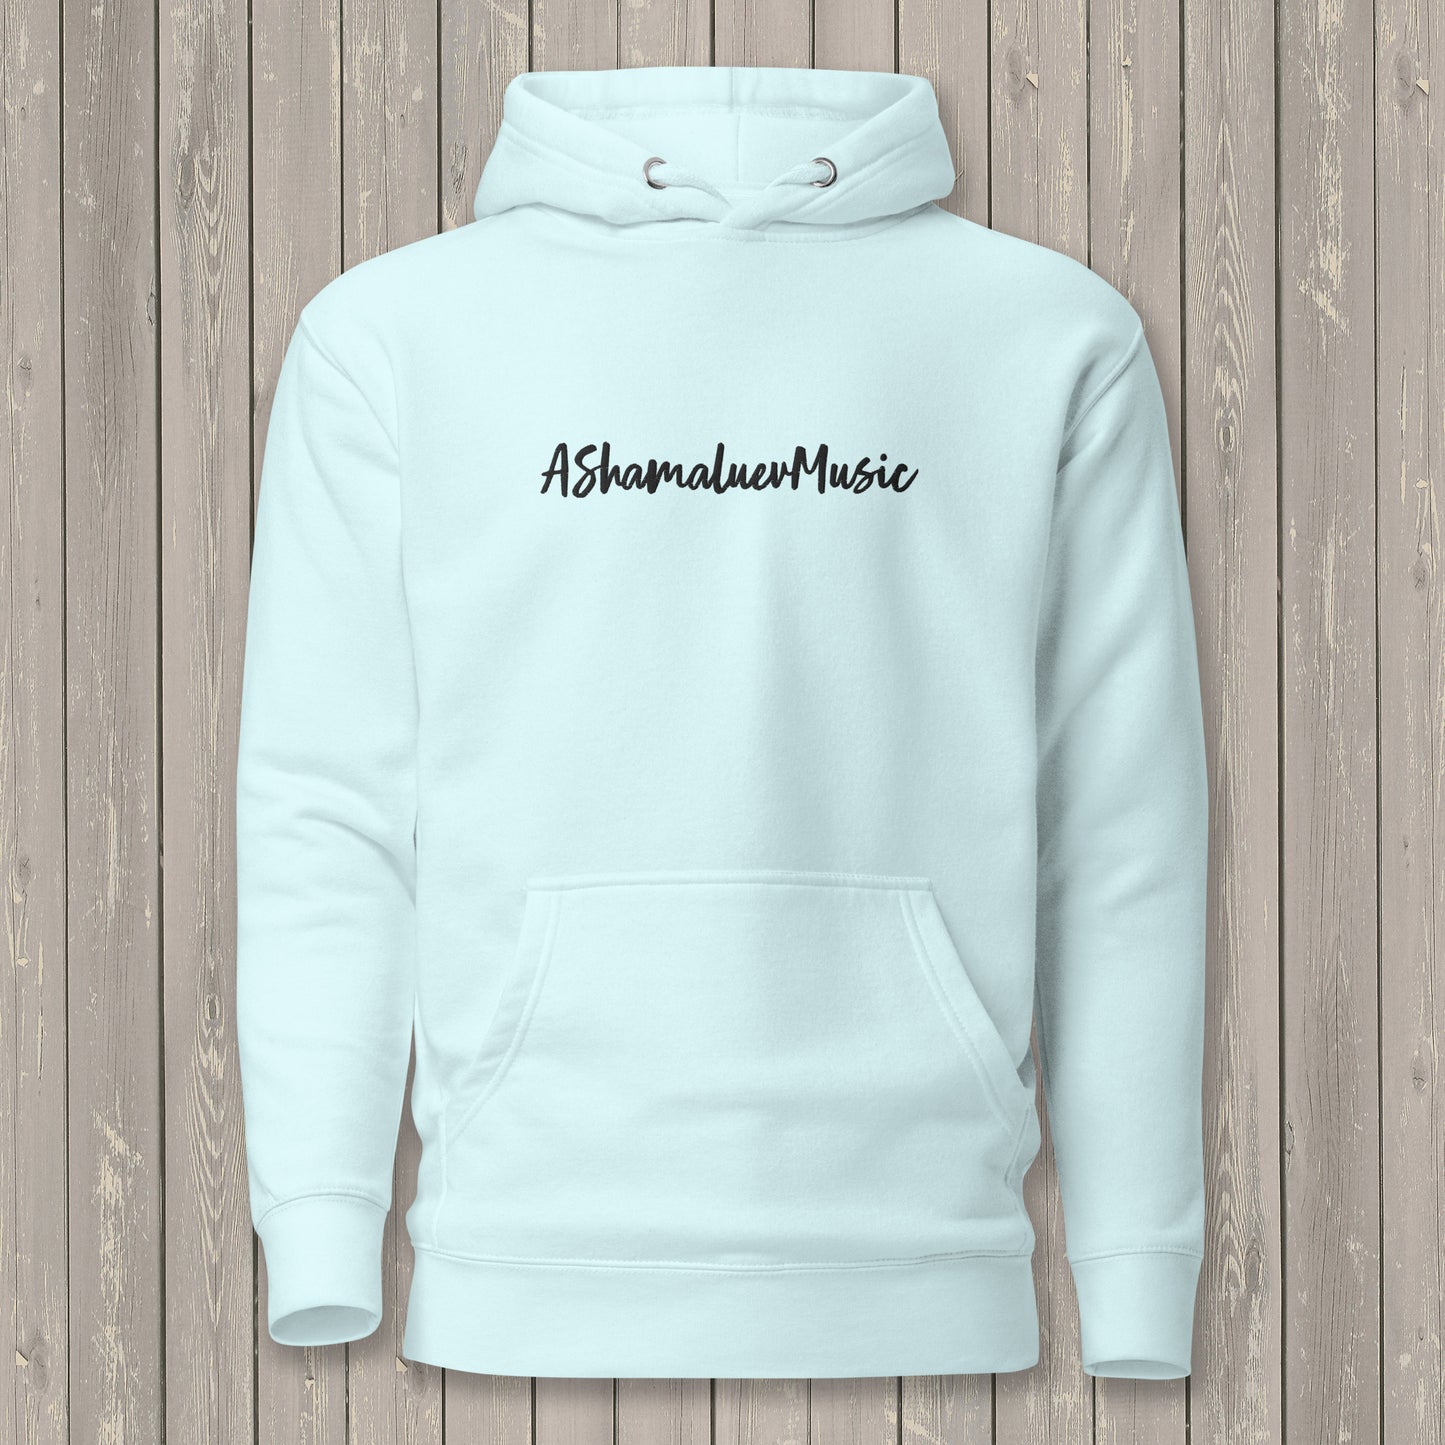 Premium Hoodie "AShamaluevMusic" (Embroidery)